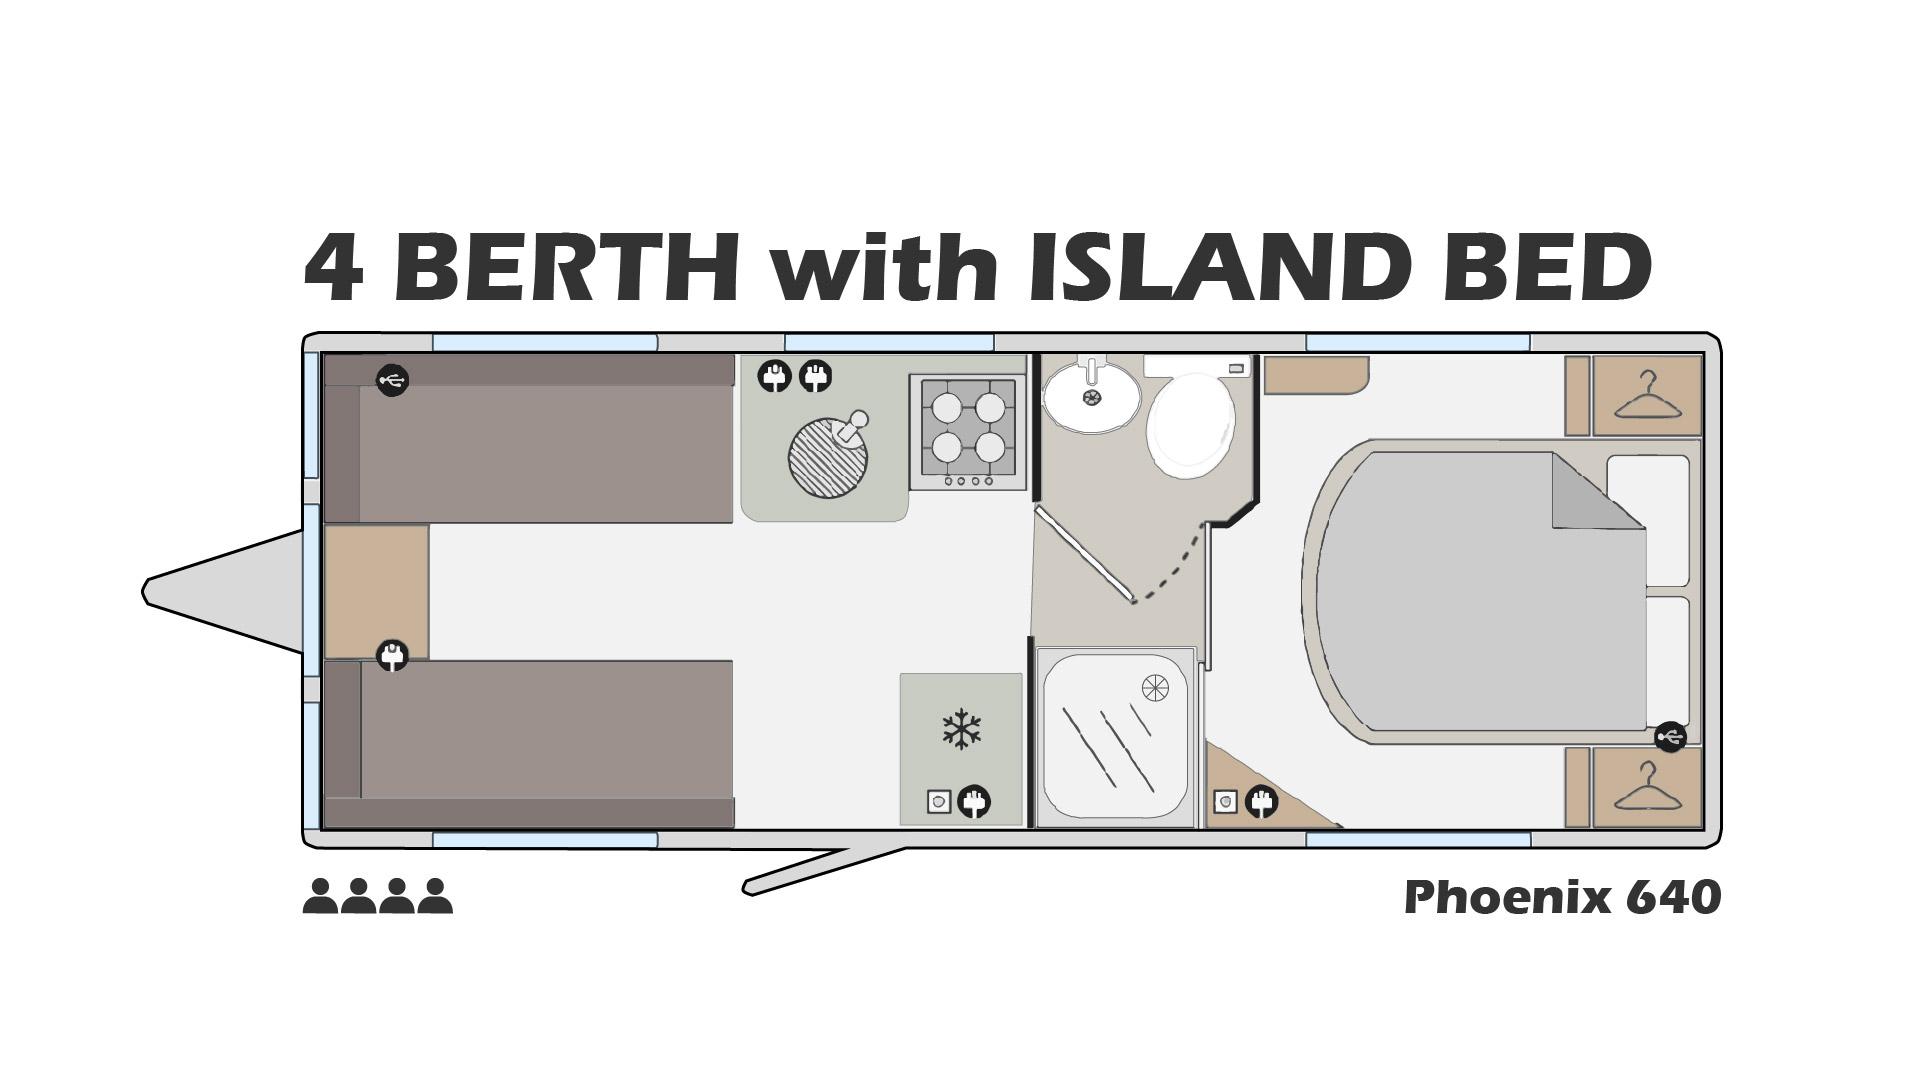 Phoenix 640 Fixed island bed Plan view